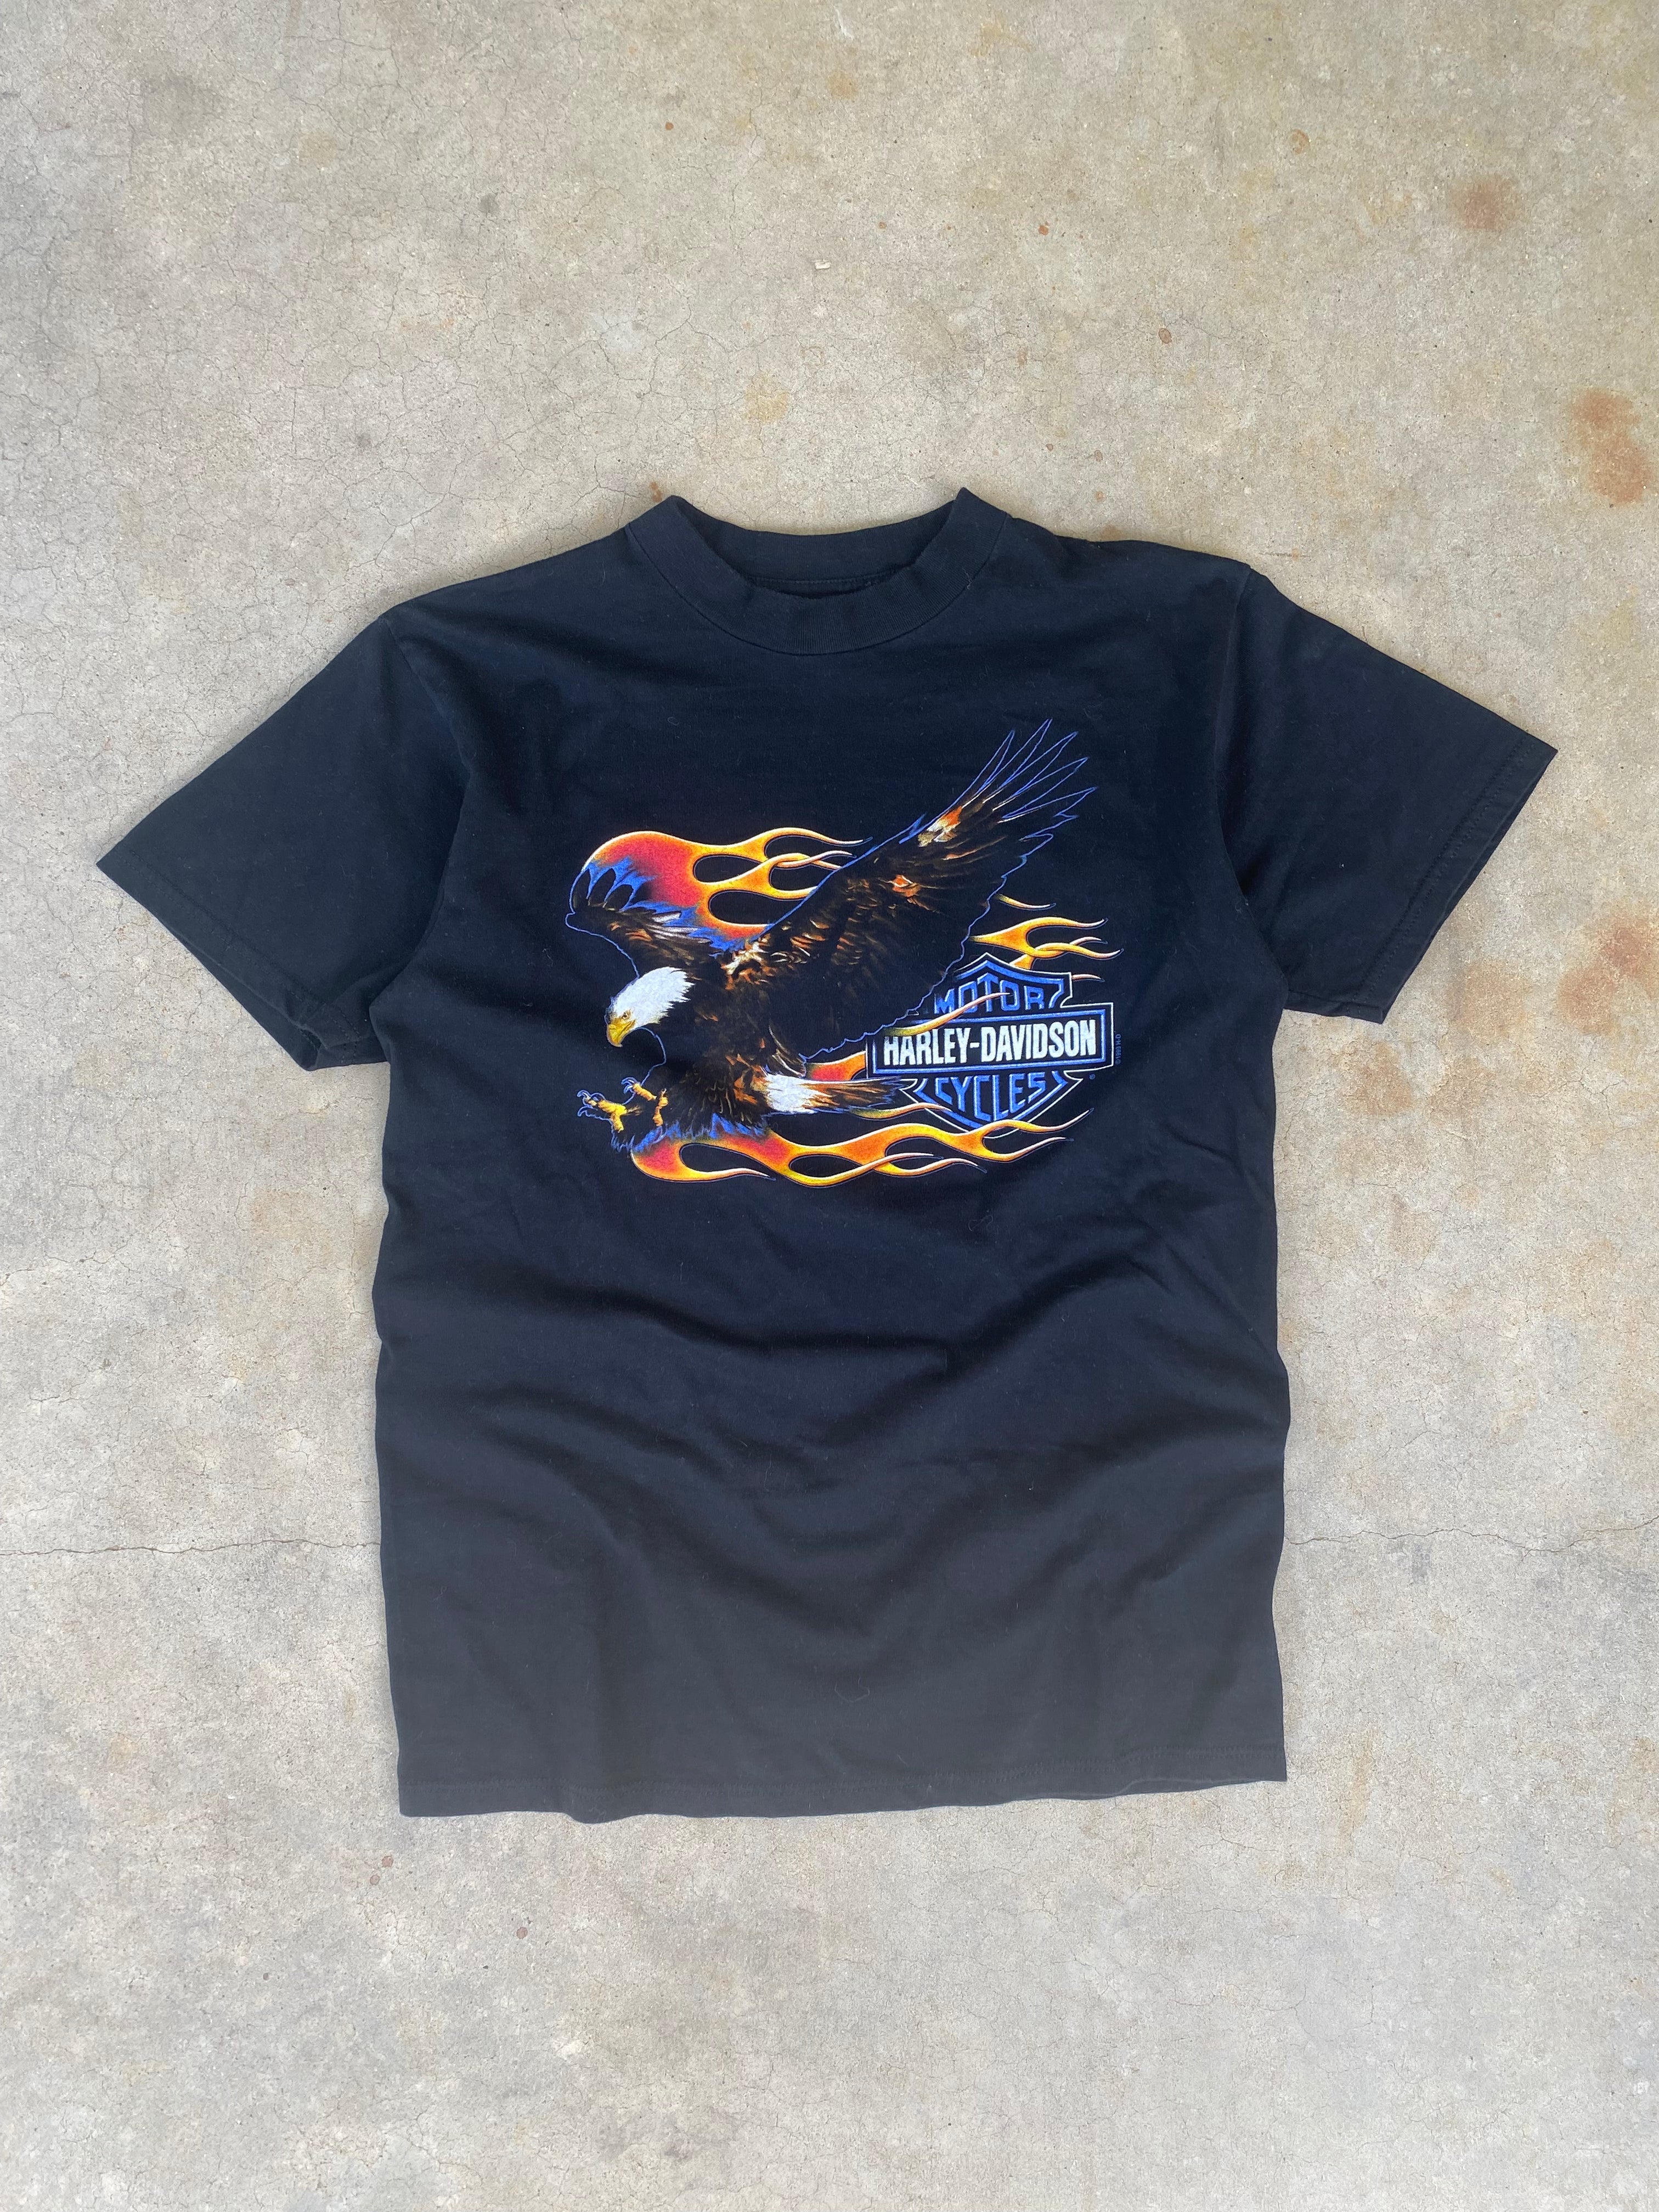 1999 Harley Davidson Eagle Flames T-Shirt